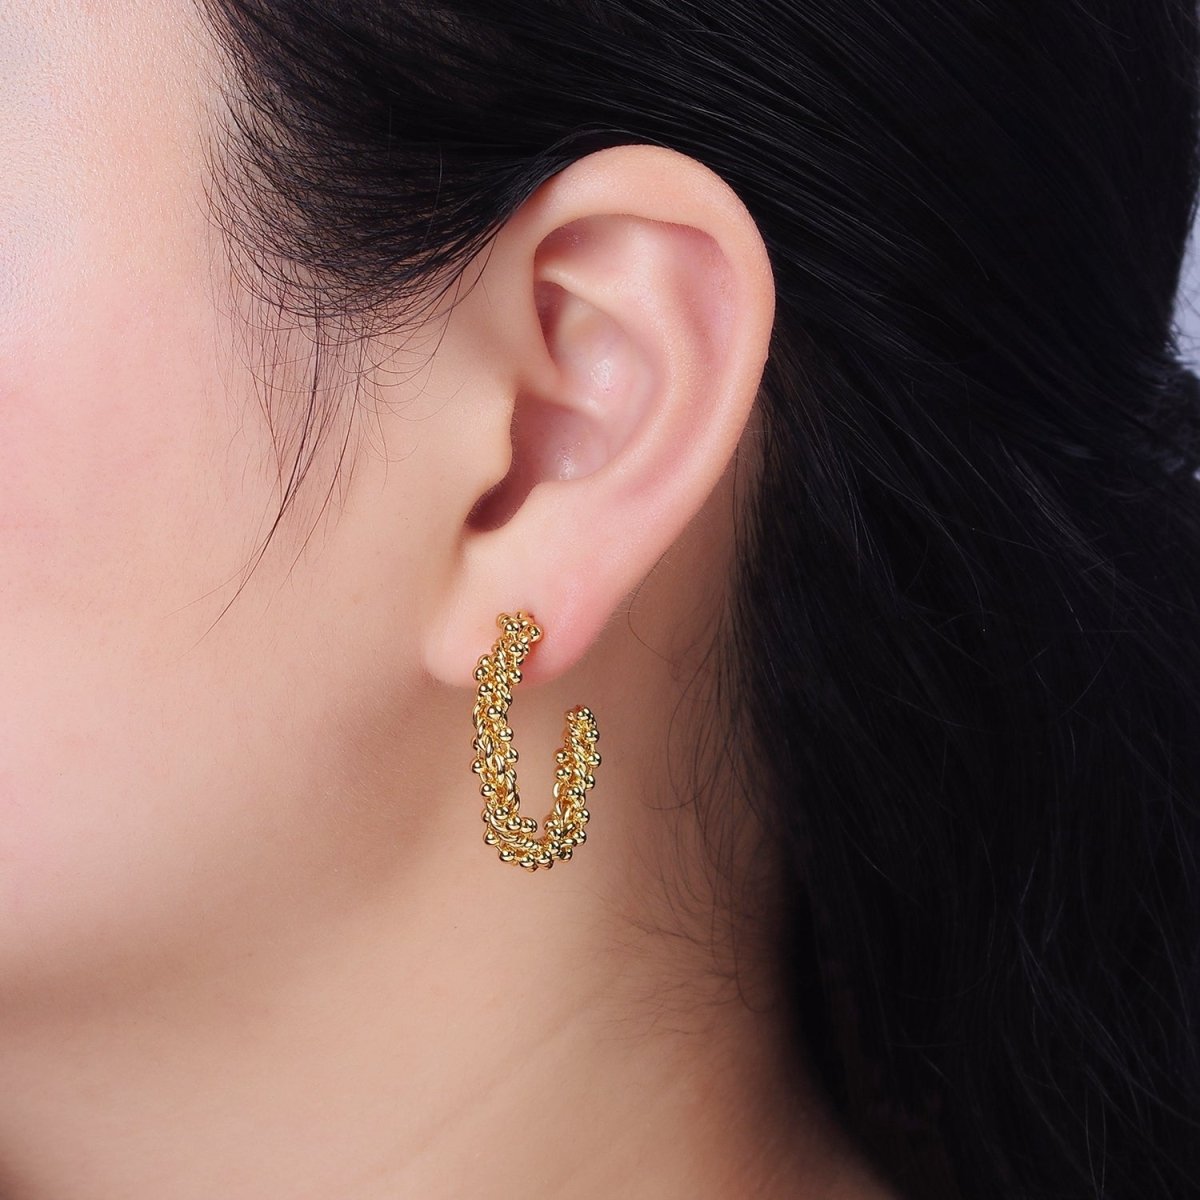 24K Gold Filled 30mm Beaded Bubble Croissant Twist C-Shaped Hoop Earrings | AE616 - DLUXCA